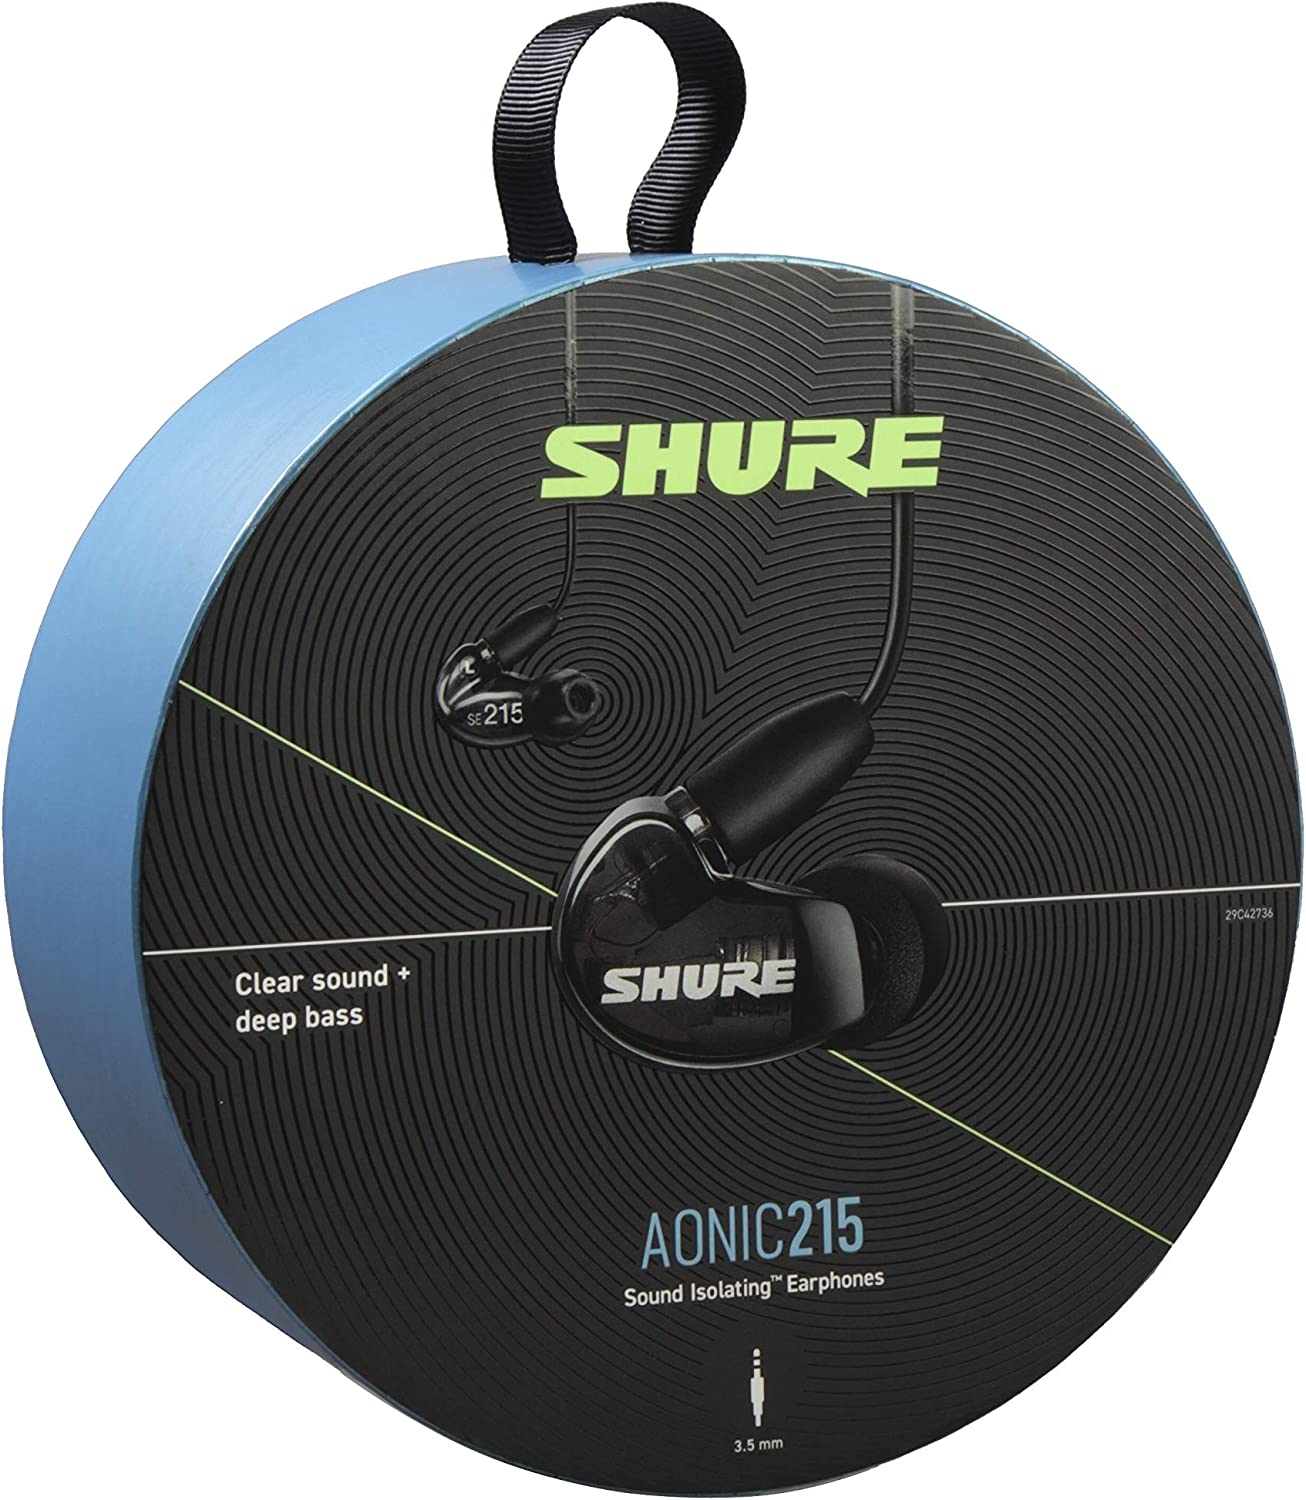 SHURE AONIC 215 SOUND ISOLATING EARPHONES - BLACK